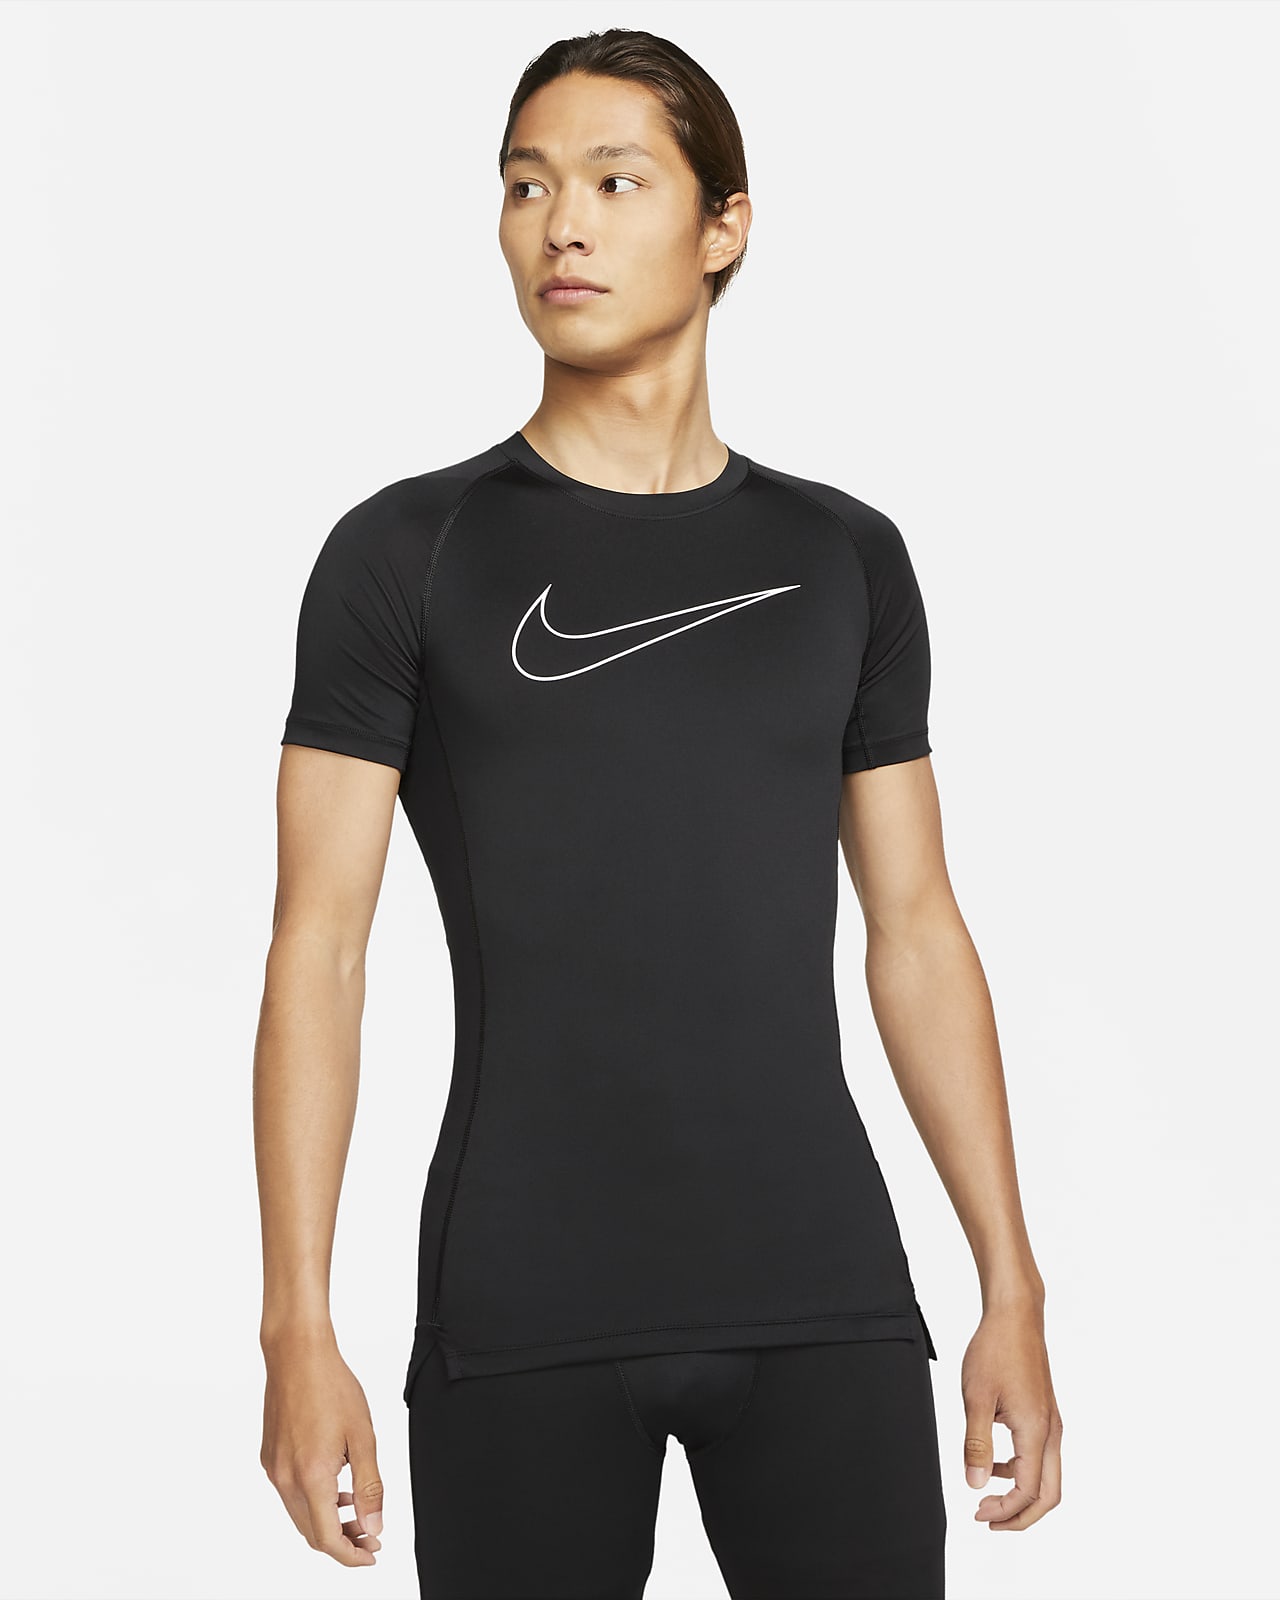 Nike Pro Dri-FIT Men's Tight Fit Short-Sleeve Top